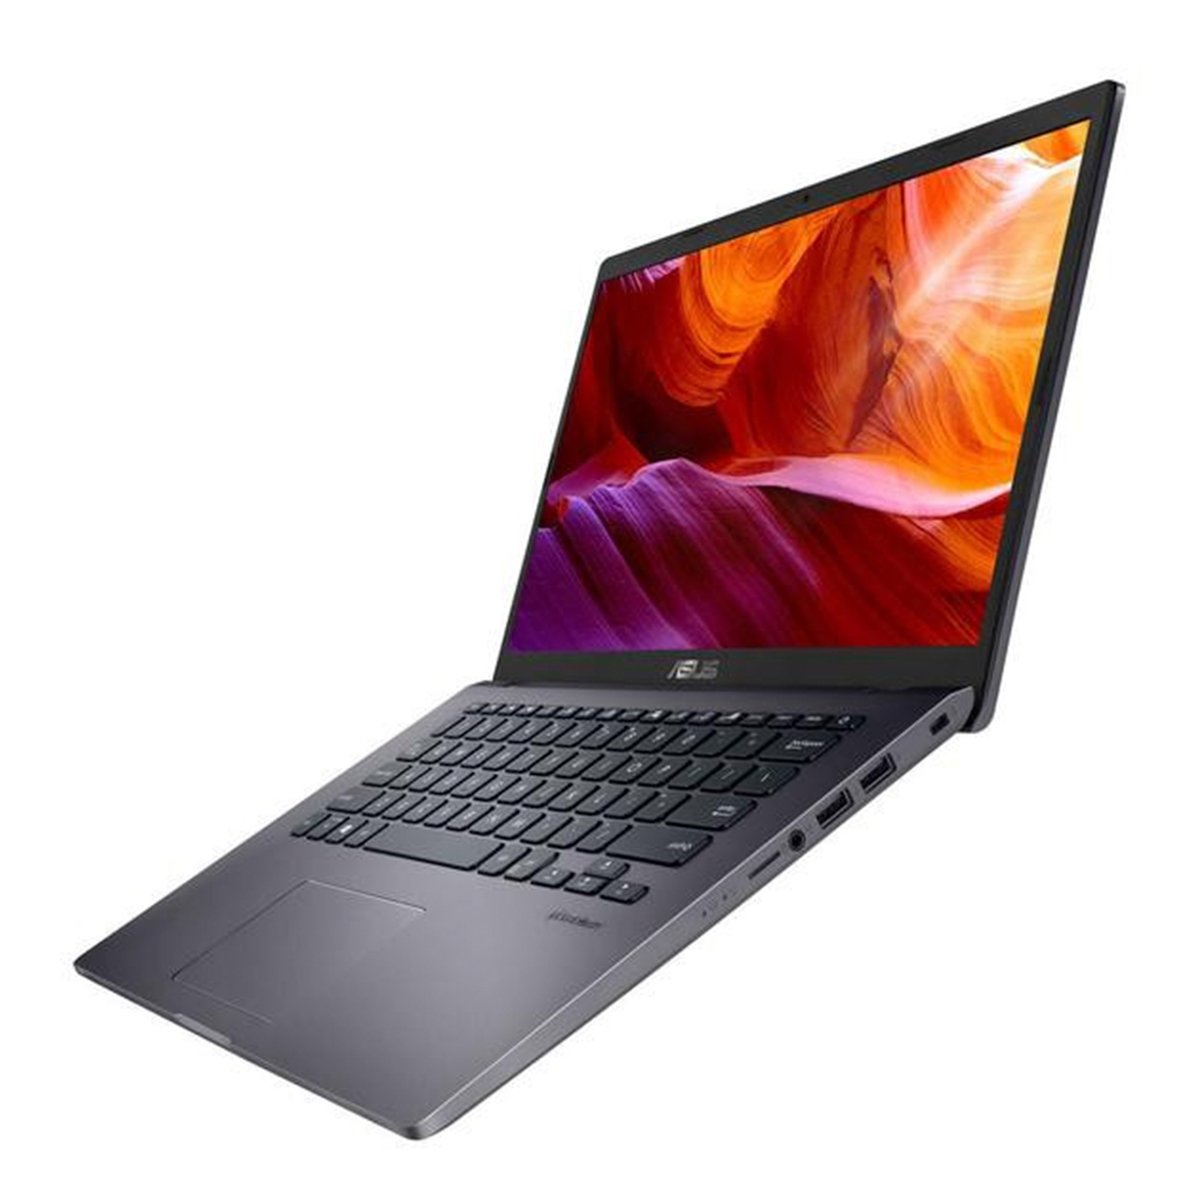 Asus Vivobook X409JB-EK031T Laptop (Slate Gray) - Intel I5-1035G1, 8 GB RAM, 1TB HDD, Nvidia Geforce MX110,14 inches,Windows 10,Eng-Arb-KB